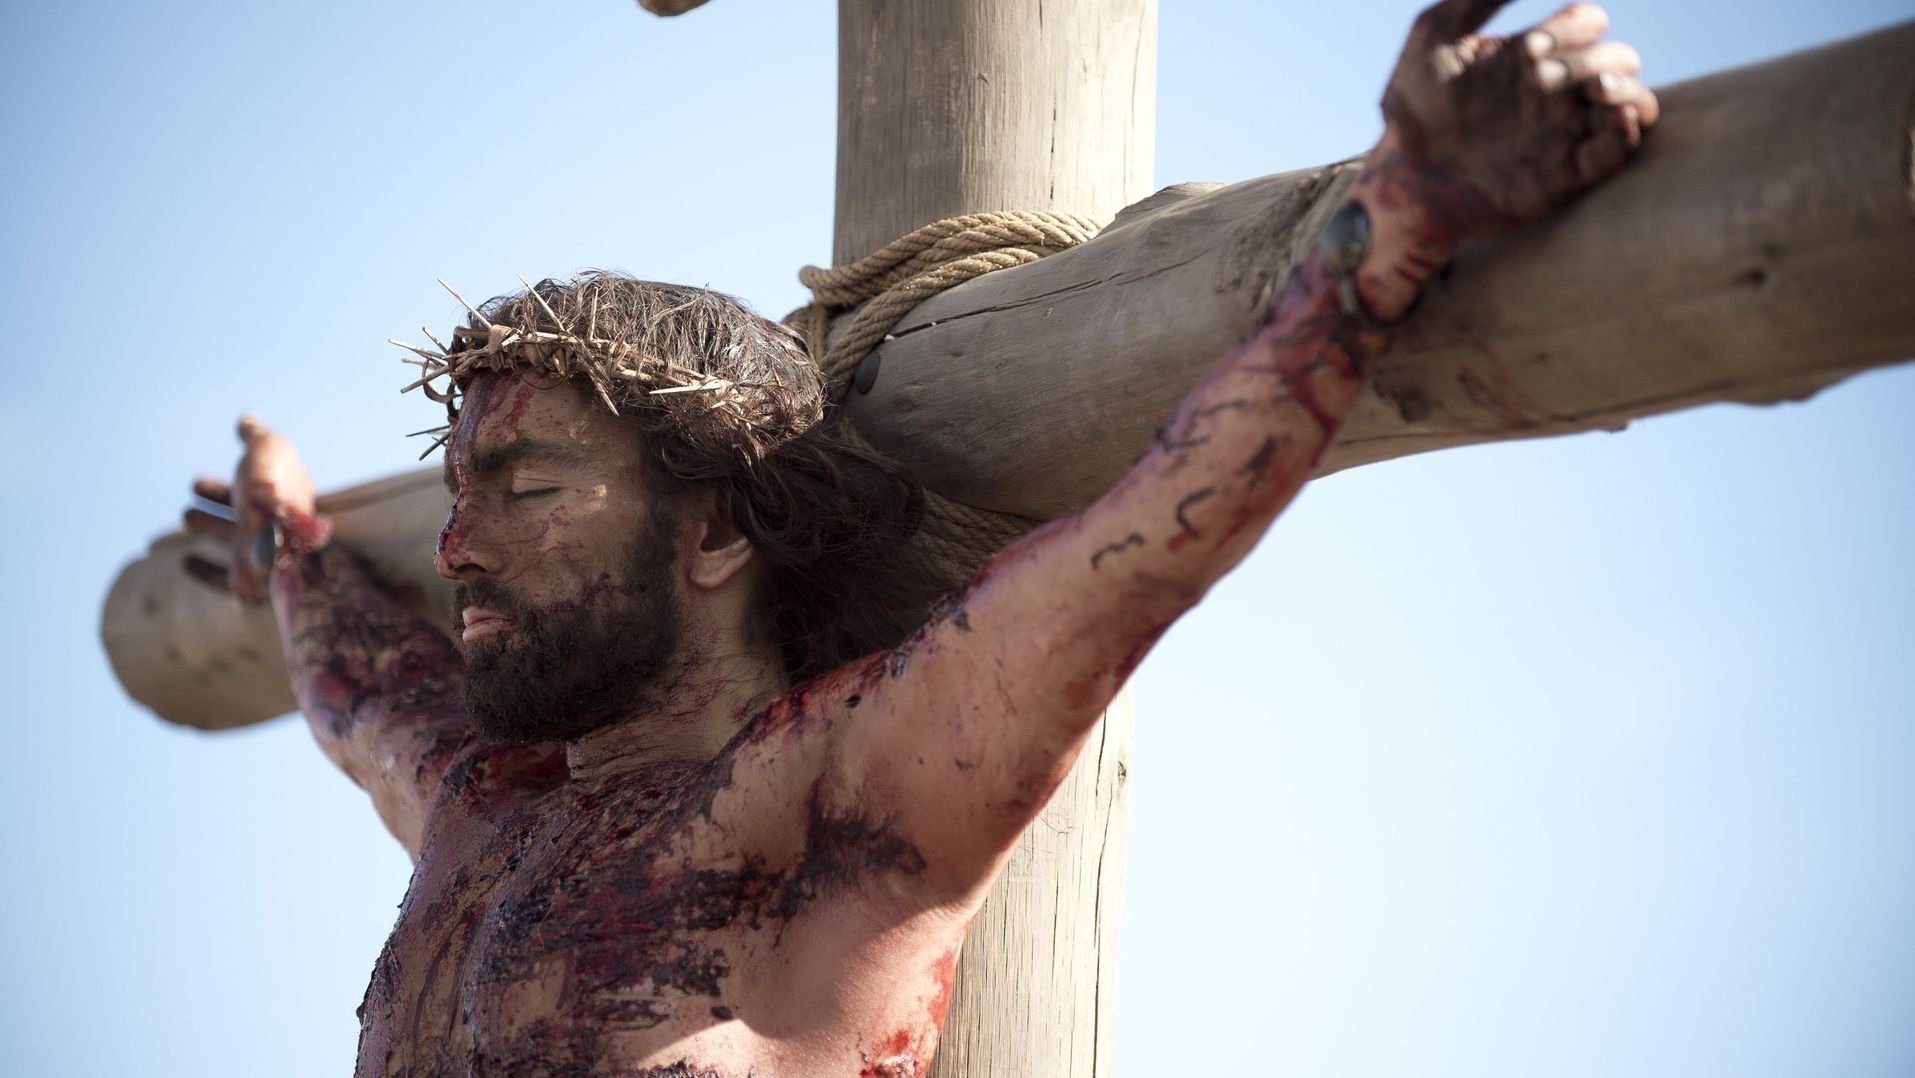 Jesus on the cross, as portrayed by Adam Bond.